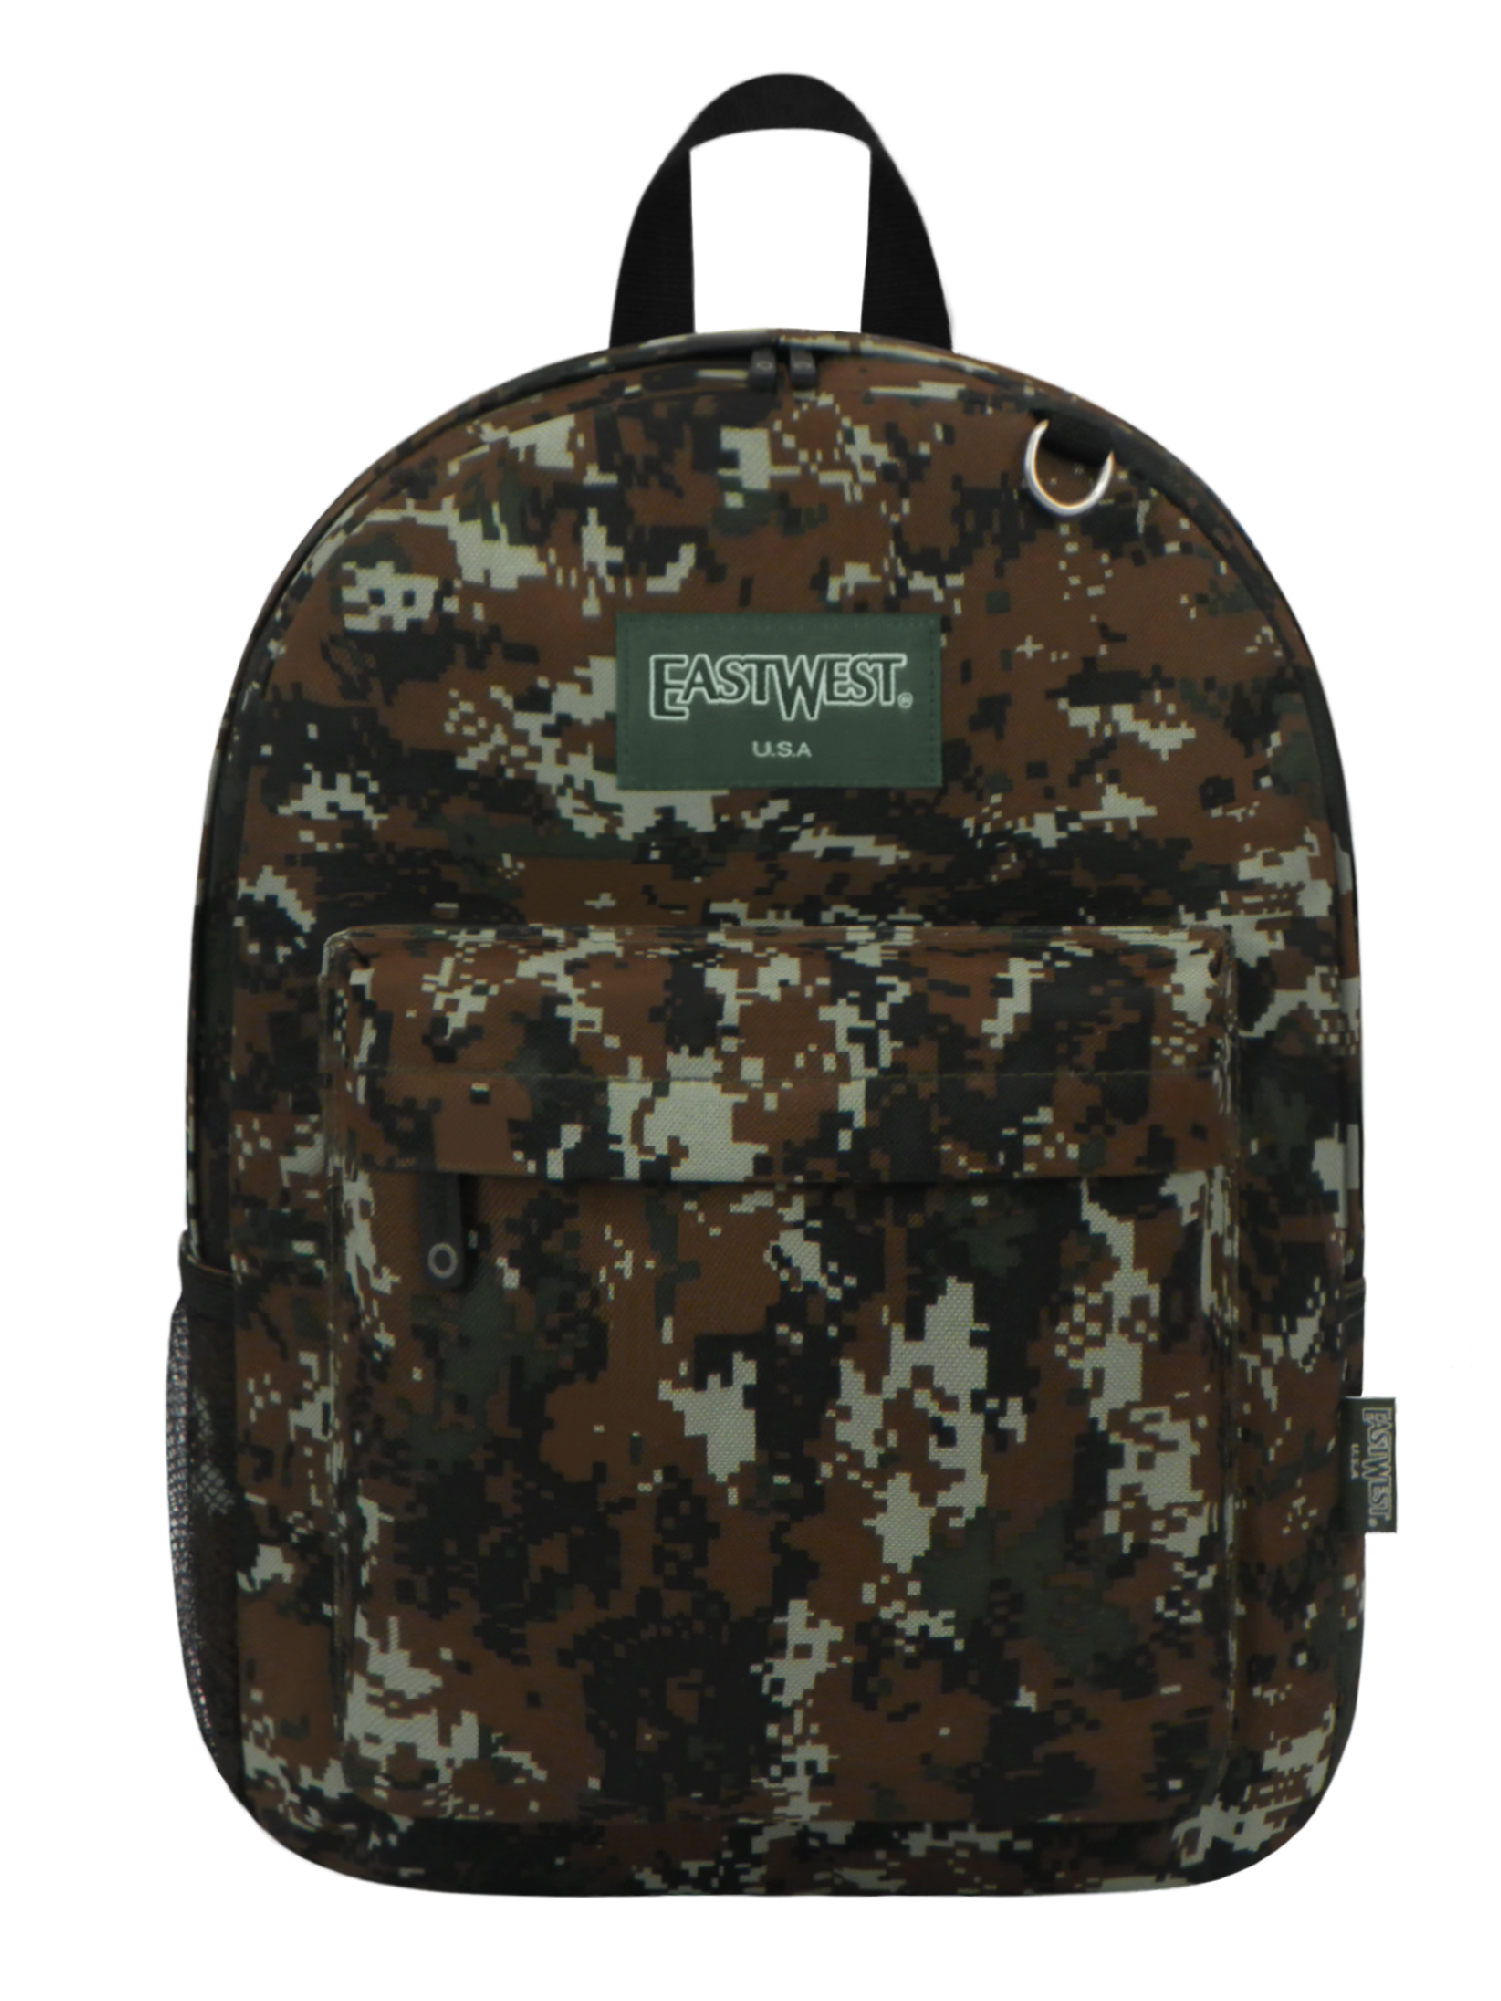 Classic Camo Backpack - Green ACU - image 1 of 5